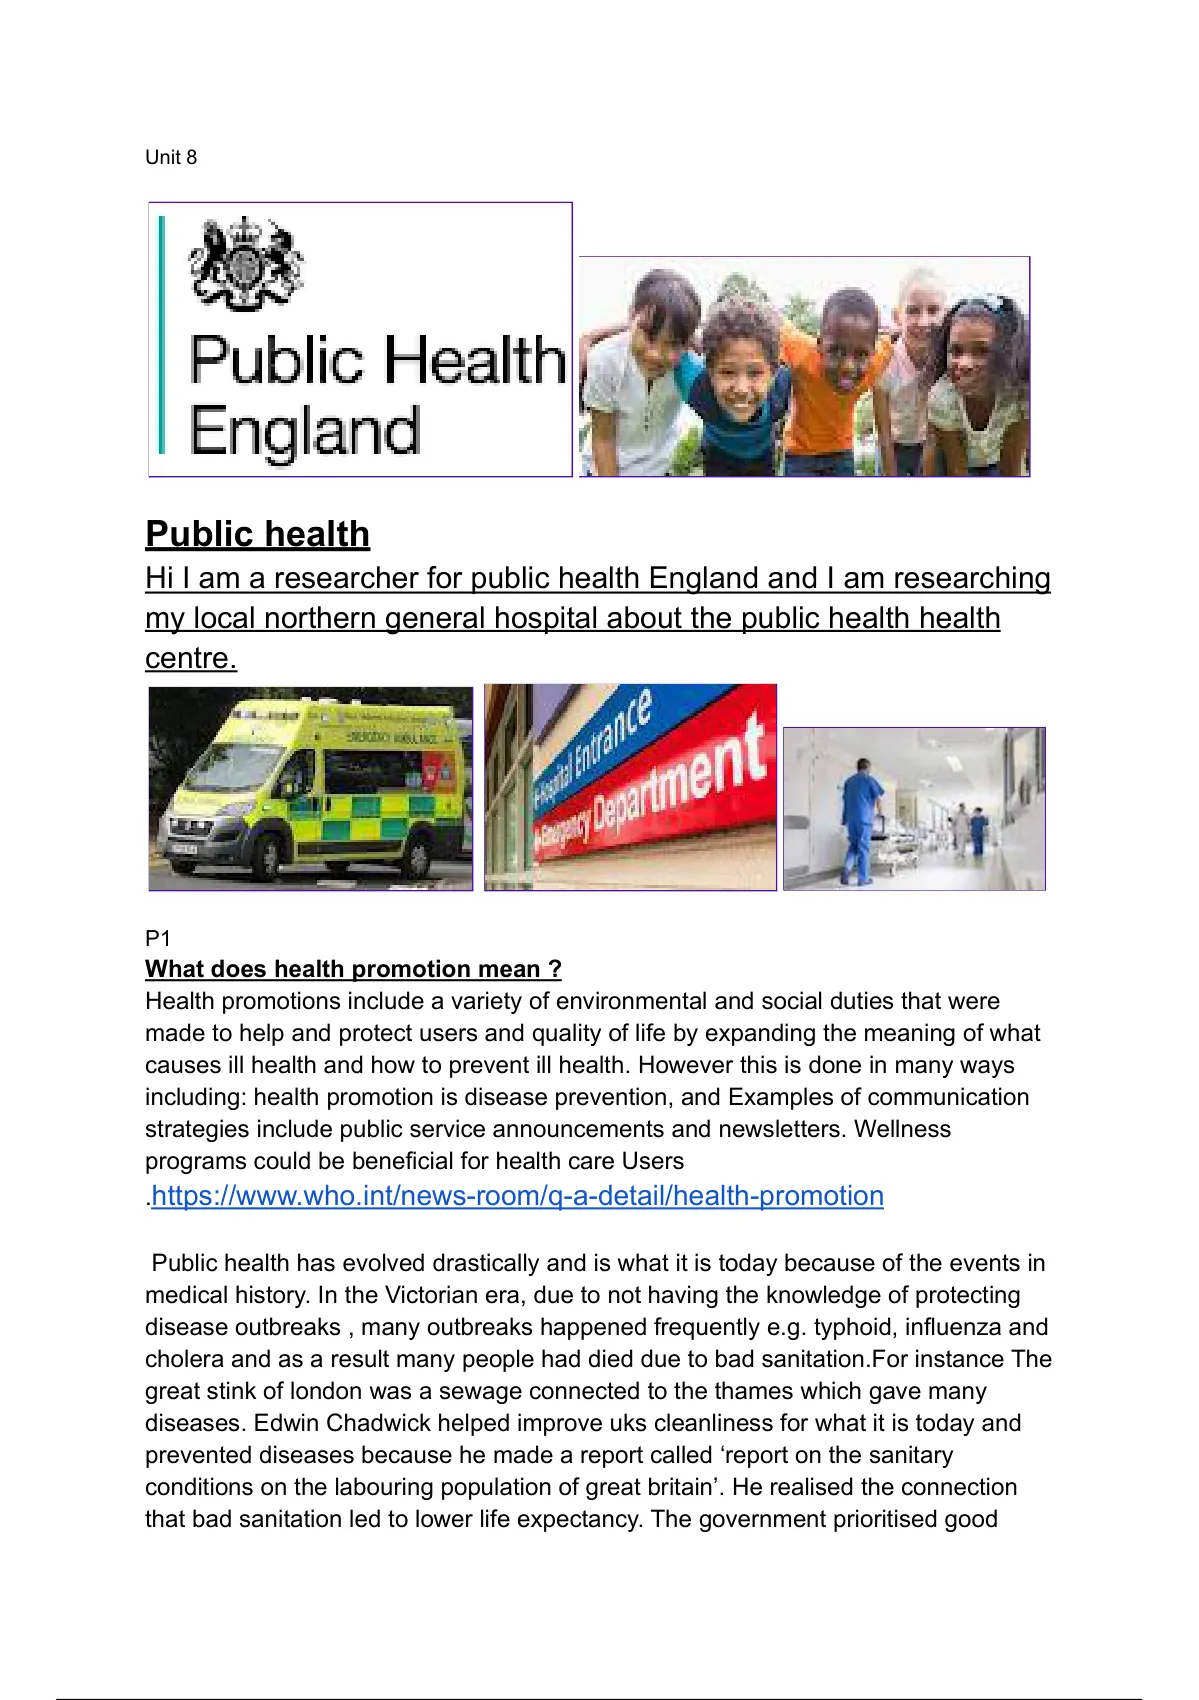 unit 8 promoting public health assignment 1 example